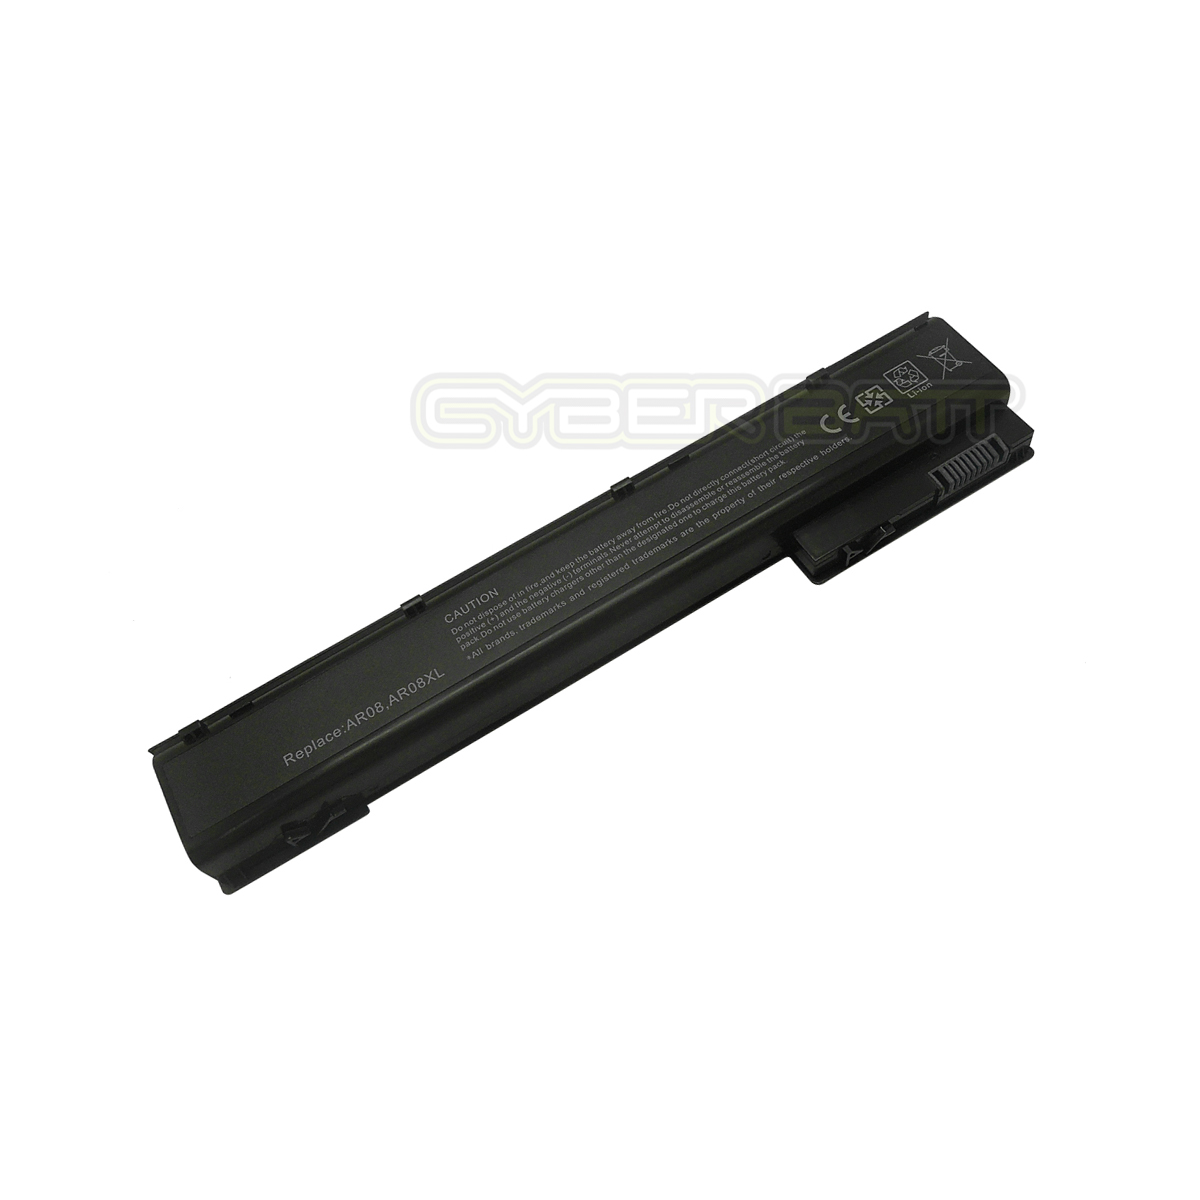 Battery HP ZBook 15 Series AR08 : 14.4V-4400mAh Black (CYBERBATT)